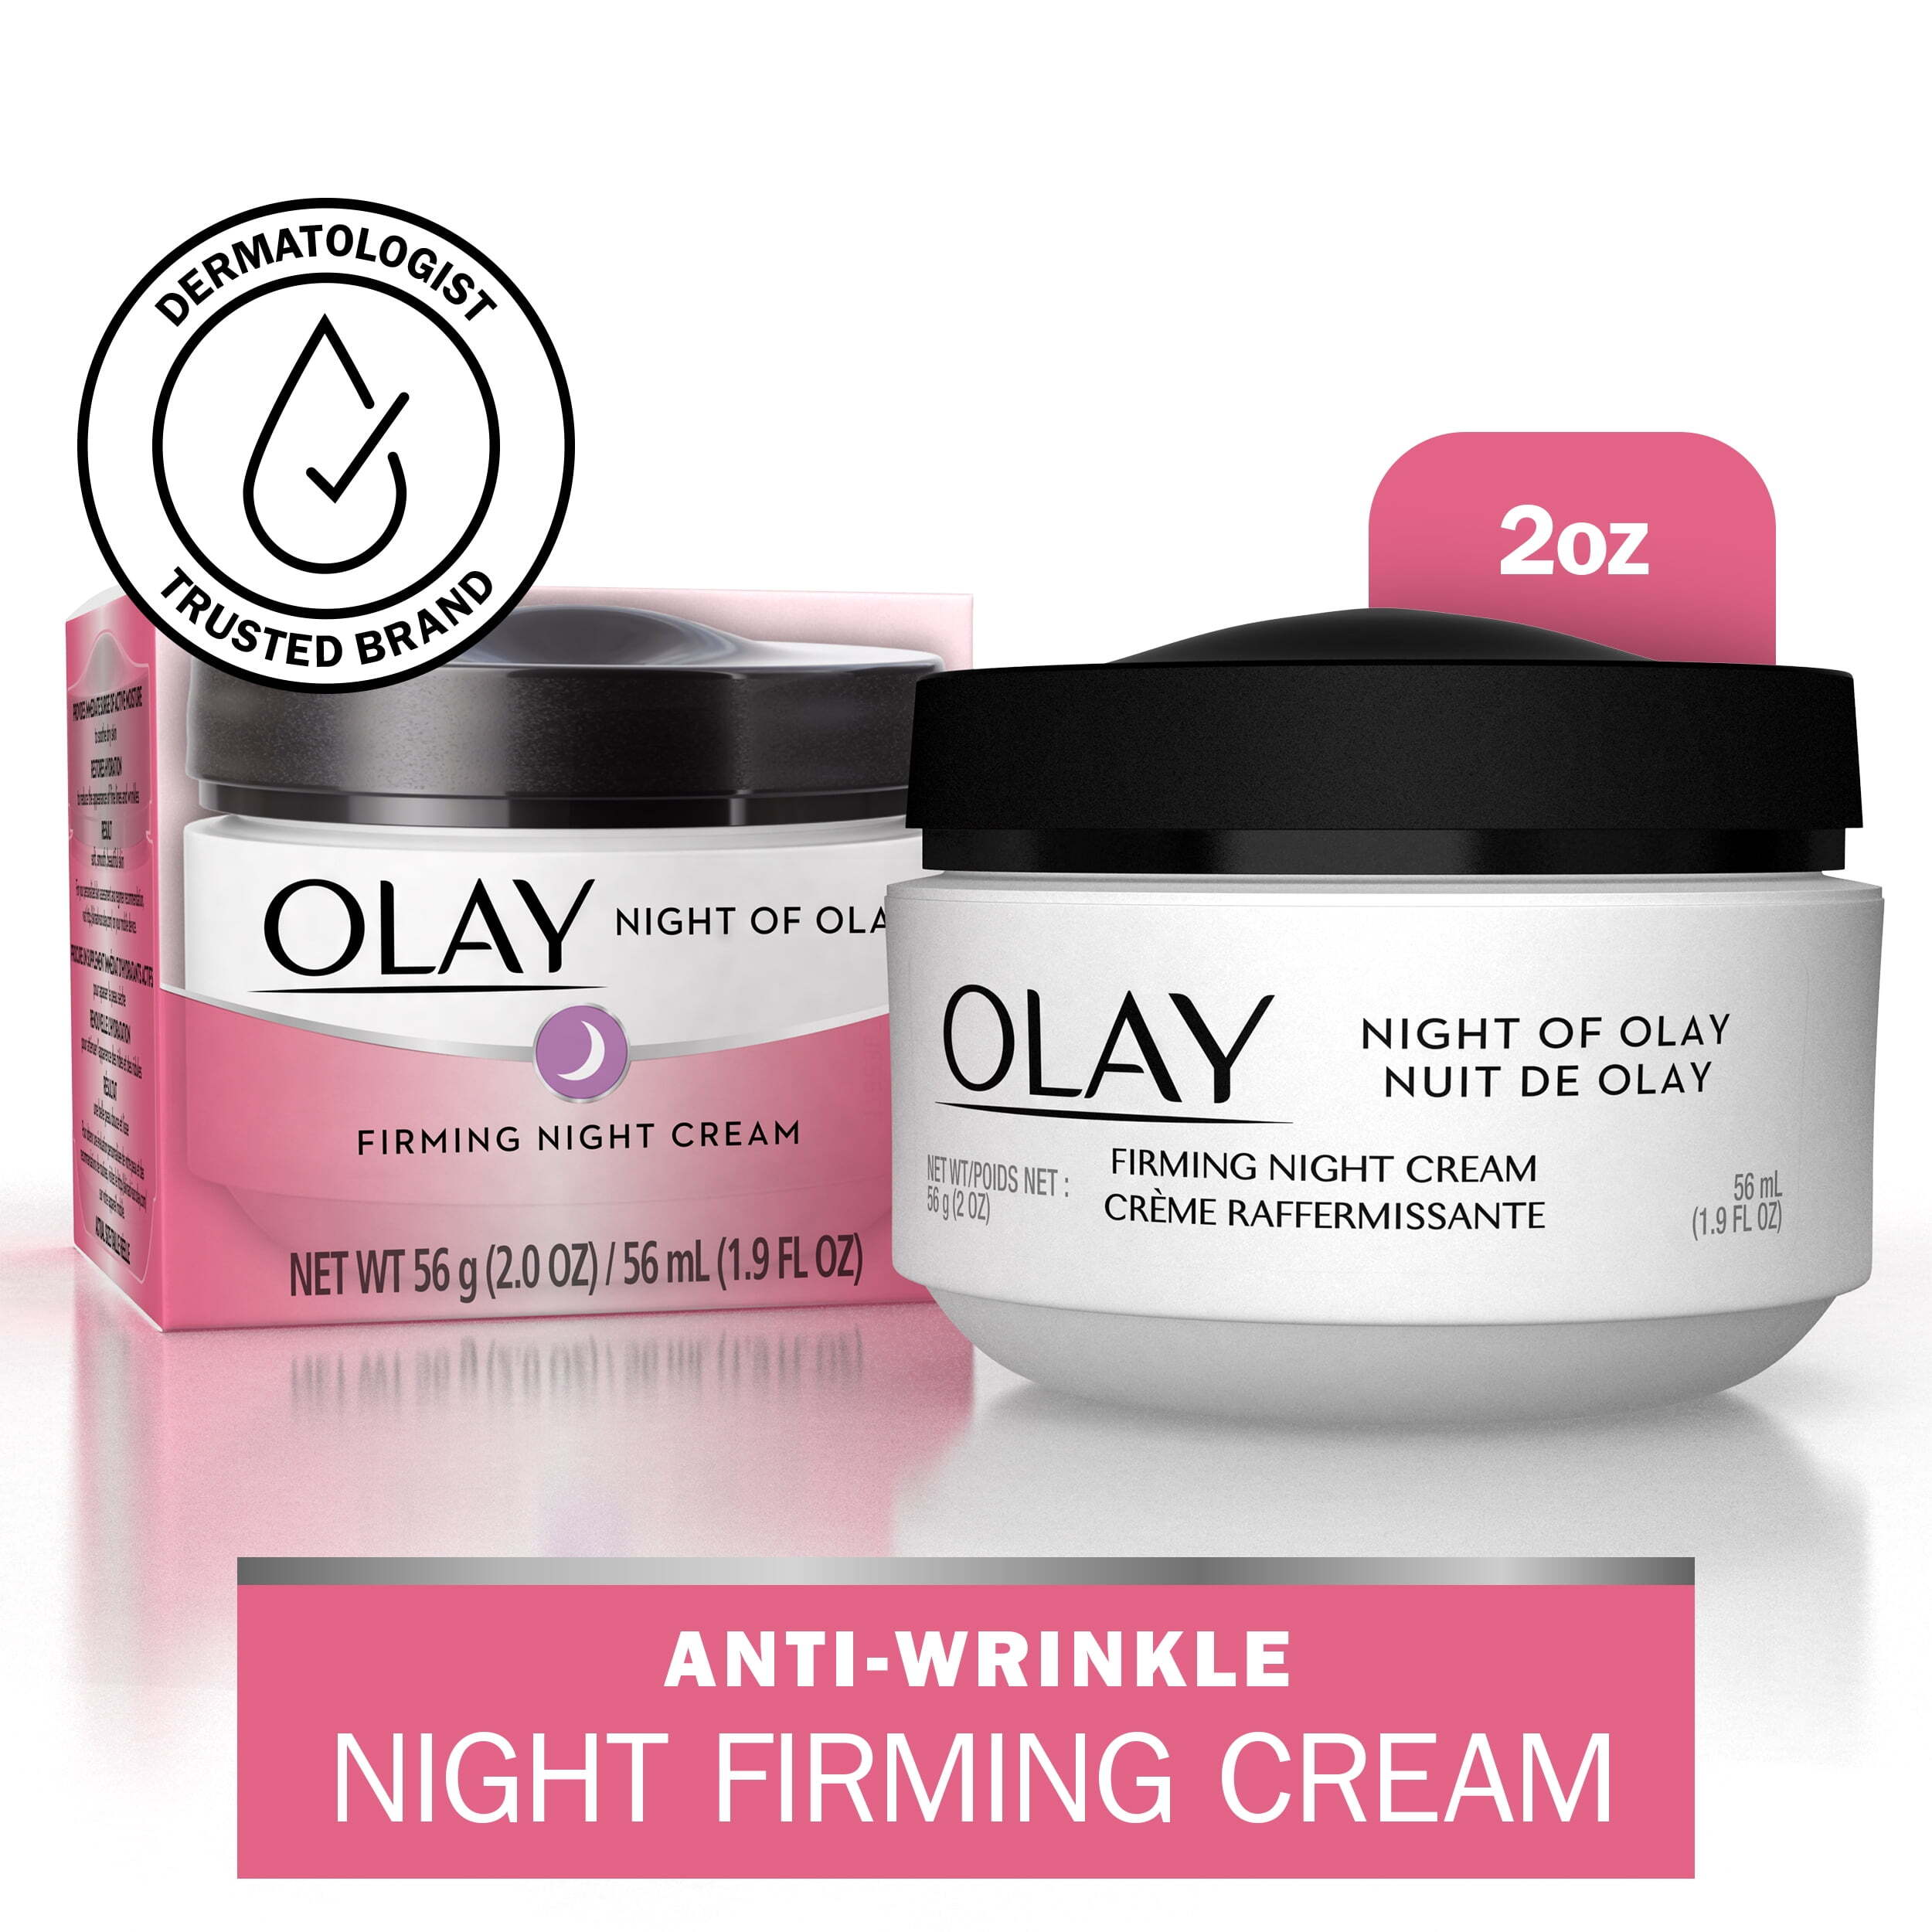 Olay Skincare Firming Night Cream Facial Moisturizer, 1.9 fl oz - image 1 of 7